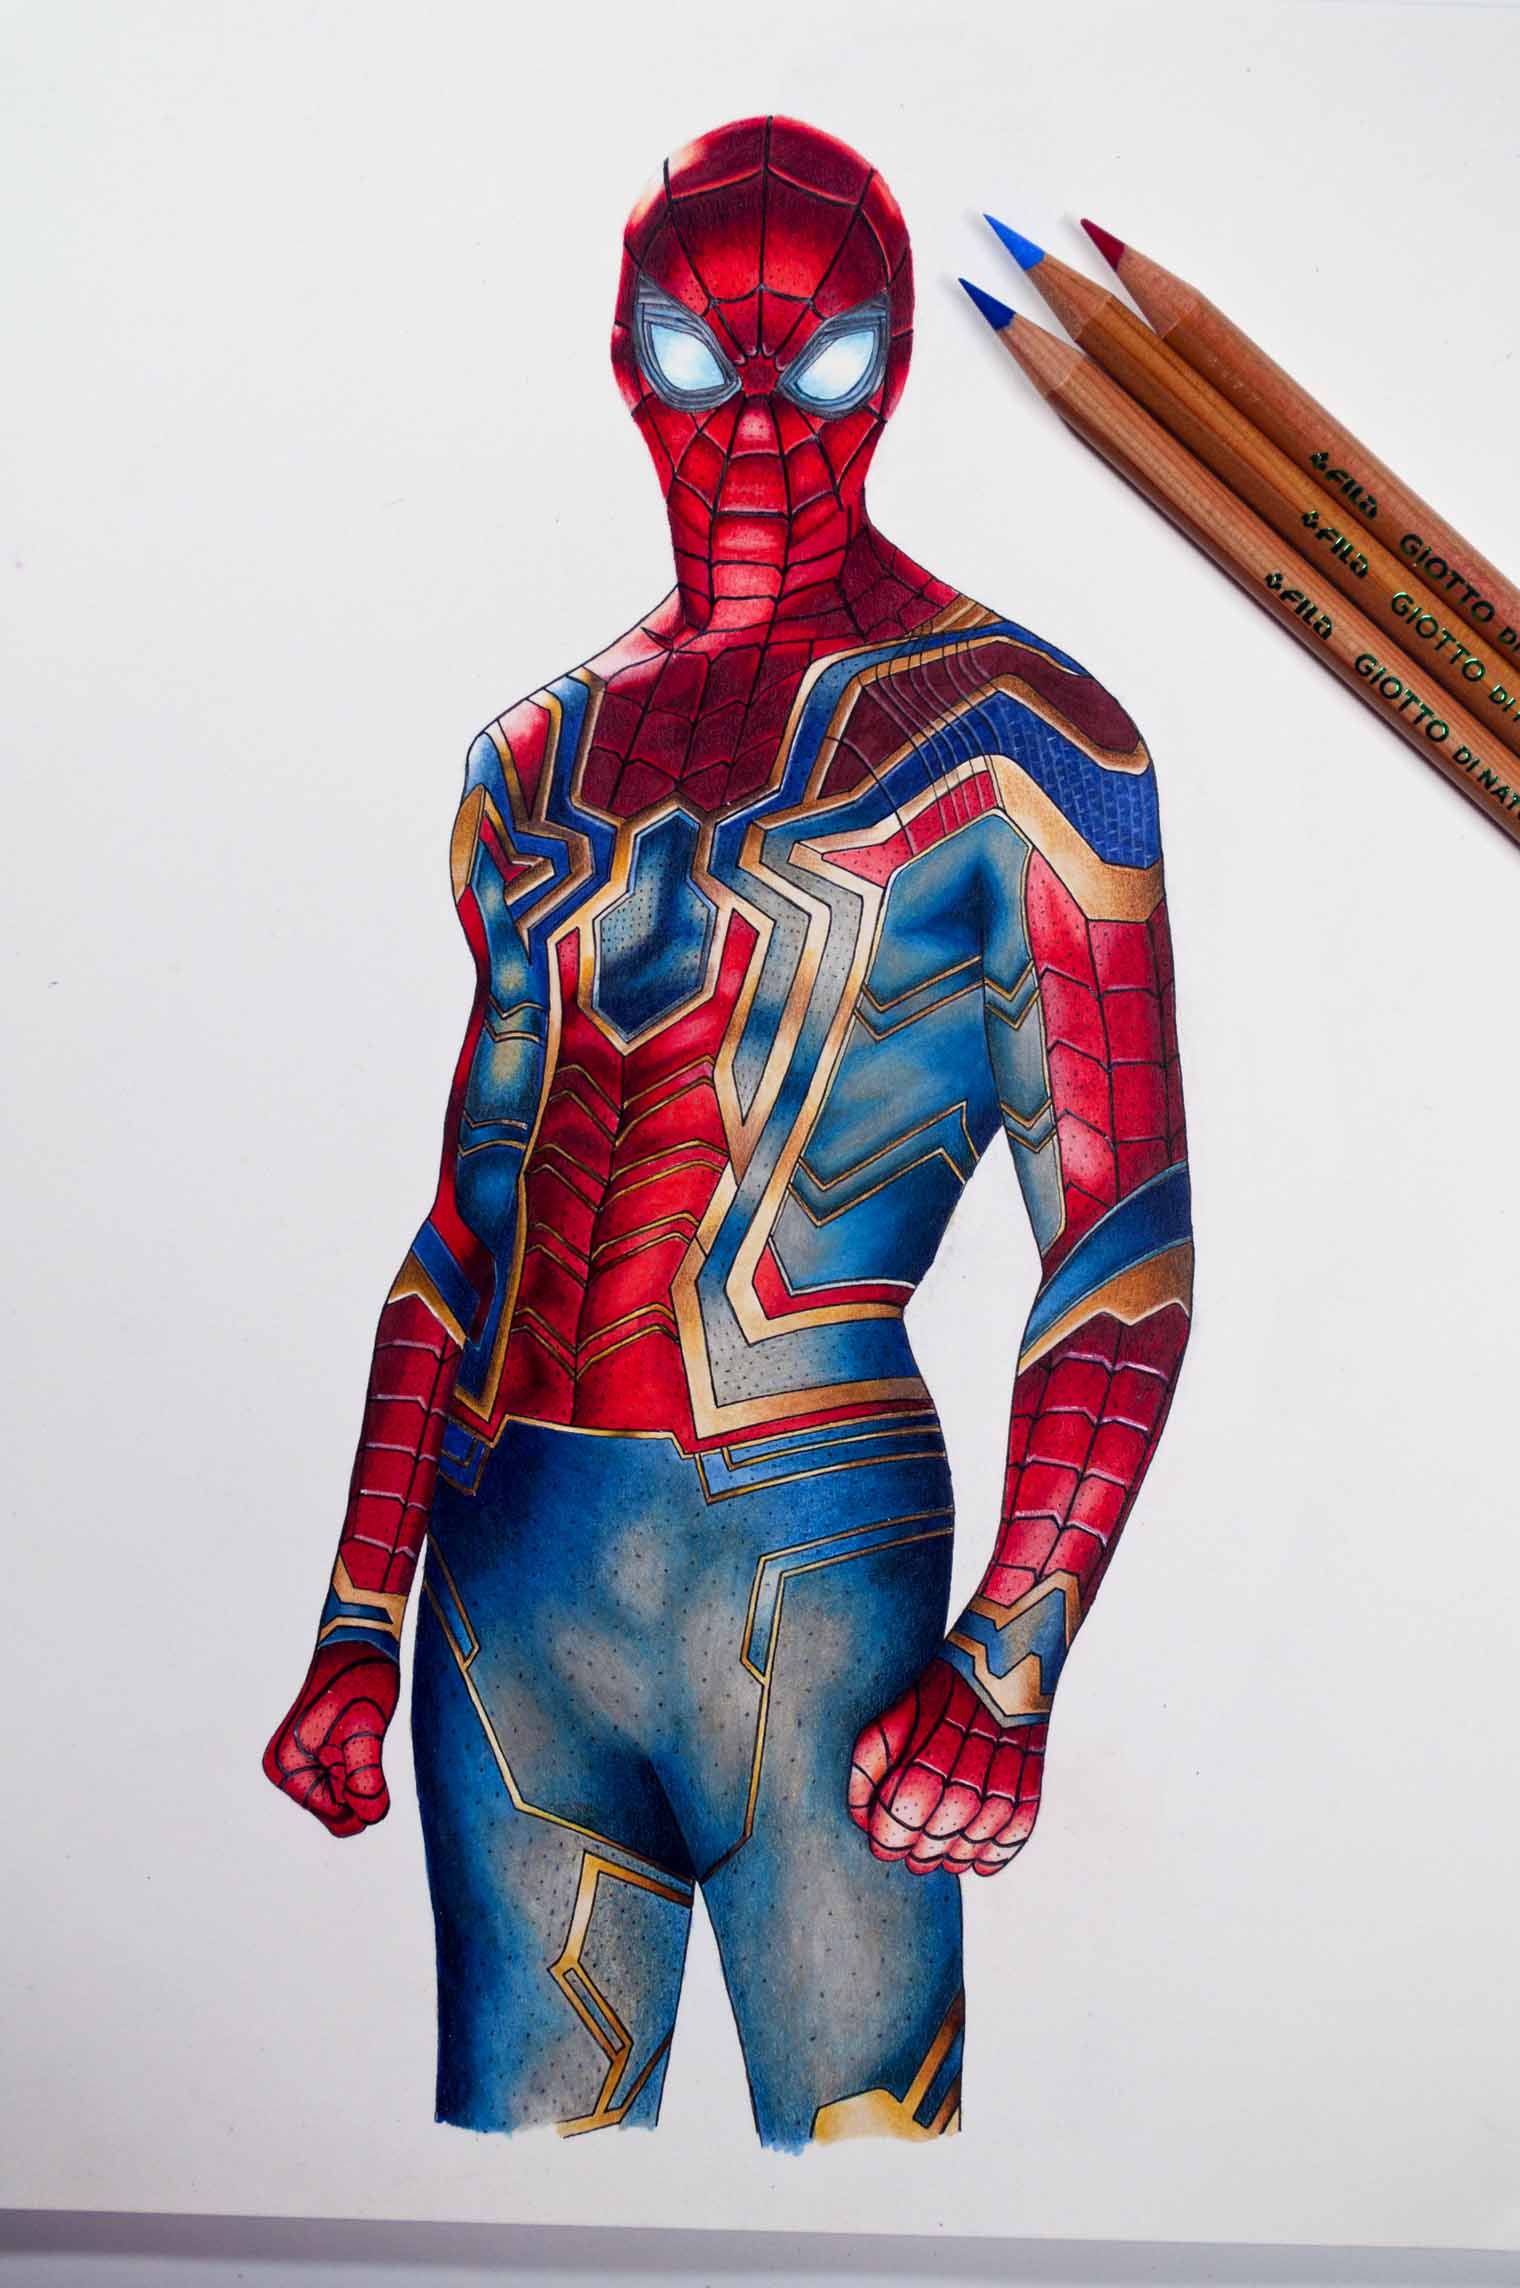 How To Draw Iron Spider | Spider-Man Draw & Color Tutorial - YouTube-saigonsouth.com.vn